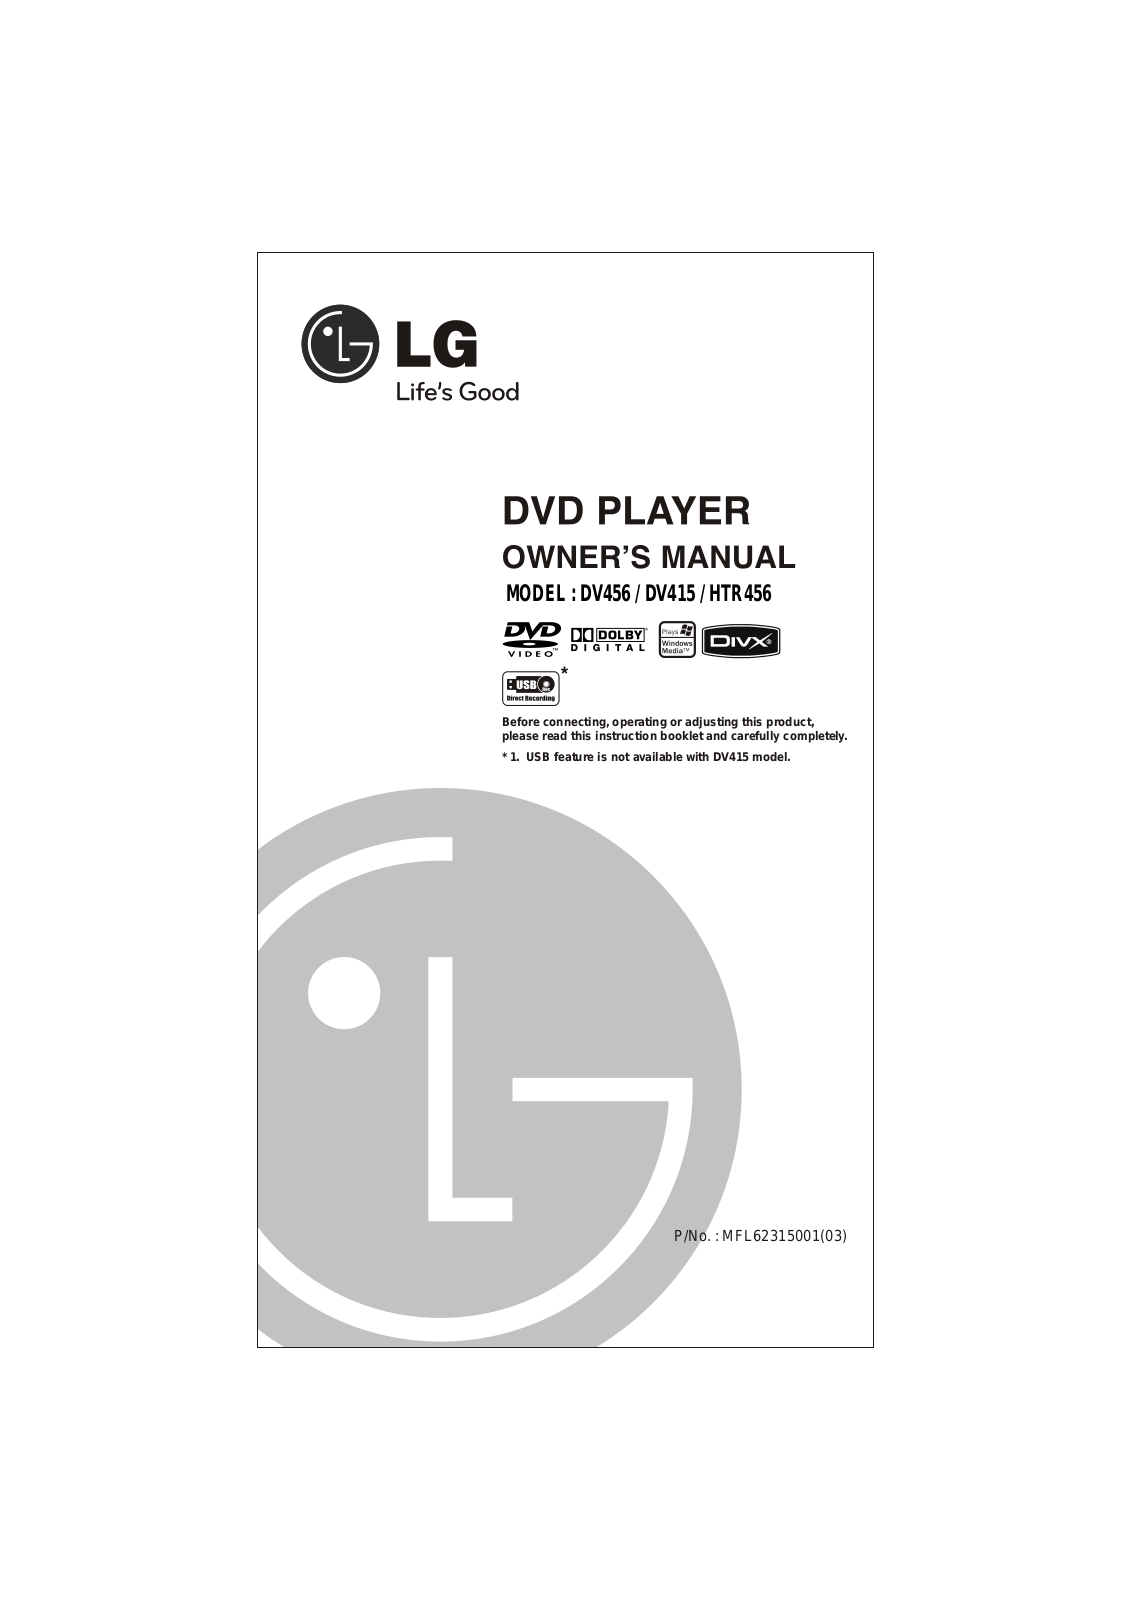 LG DV415-P, DV456-P, HTR456-P Owner’s Manual